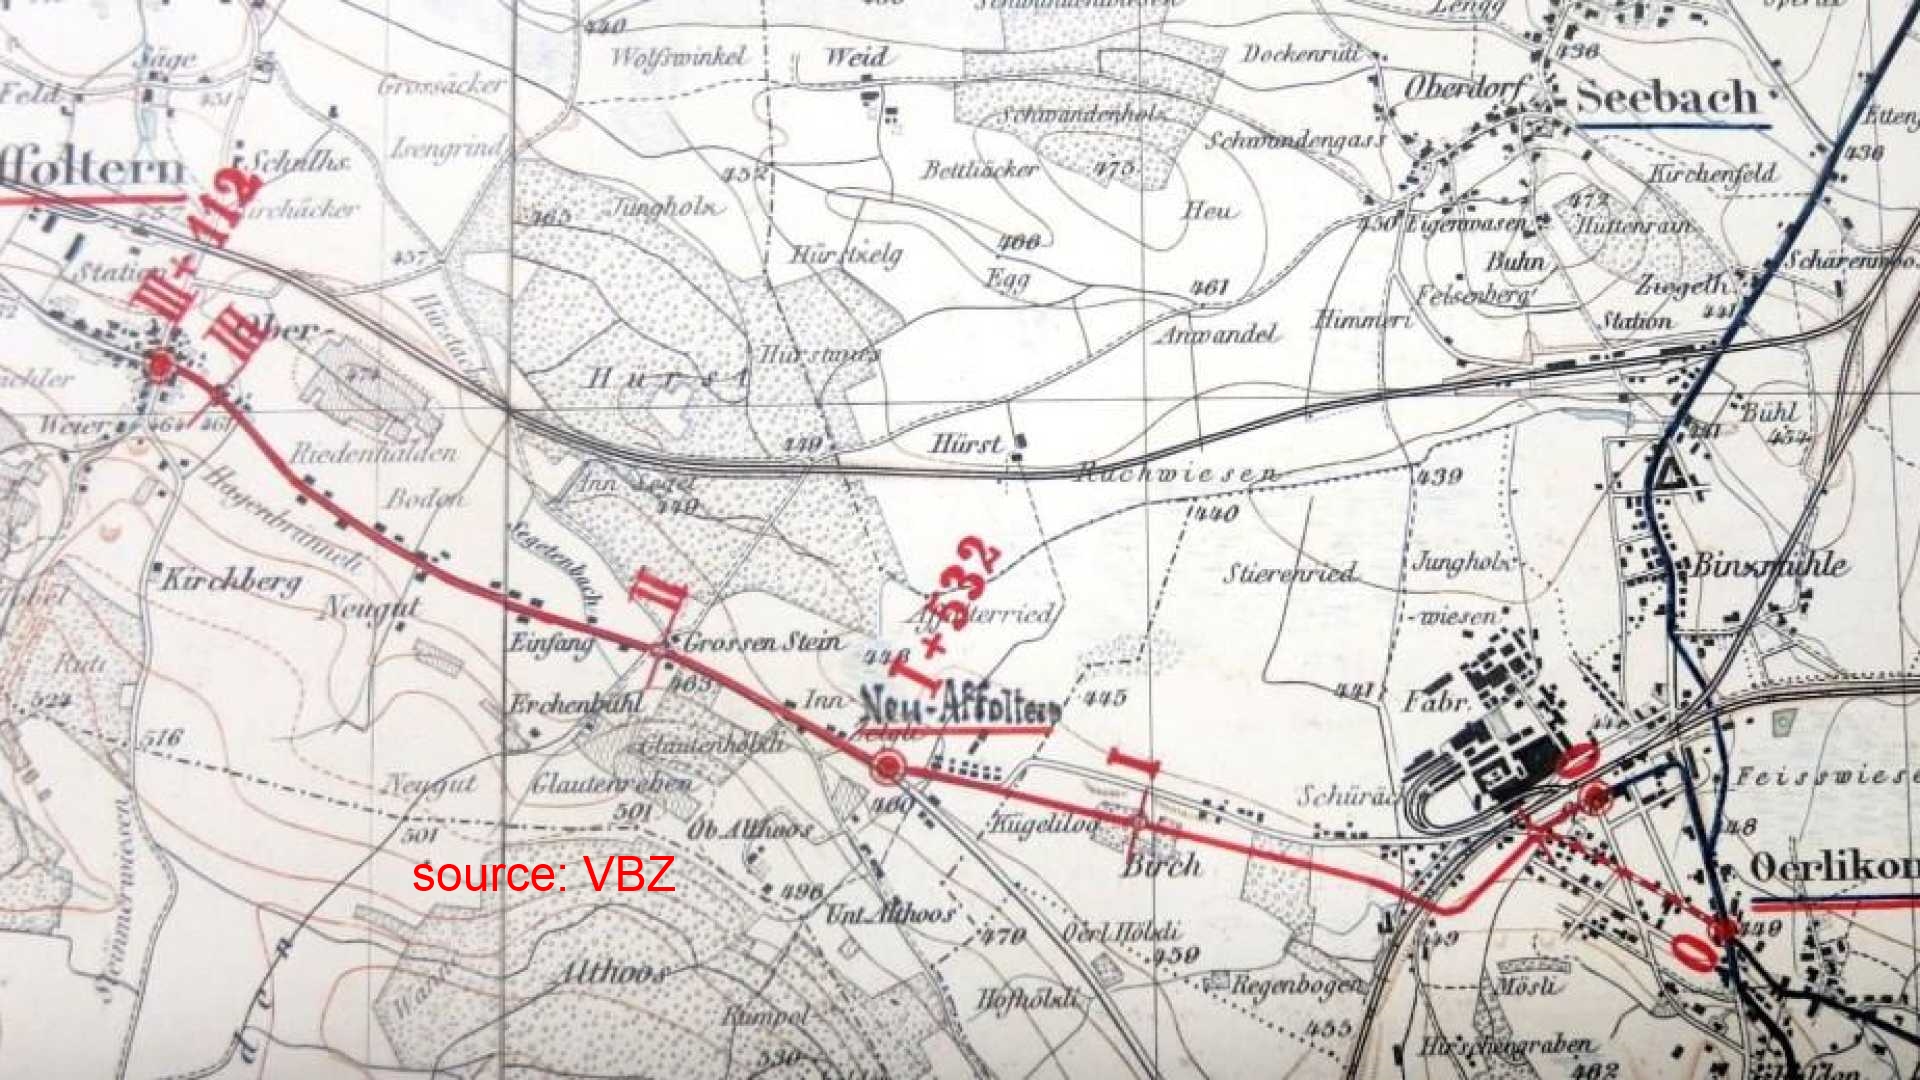 VBZ tram Affoltern 1910 plan